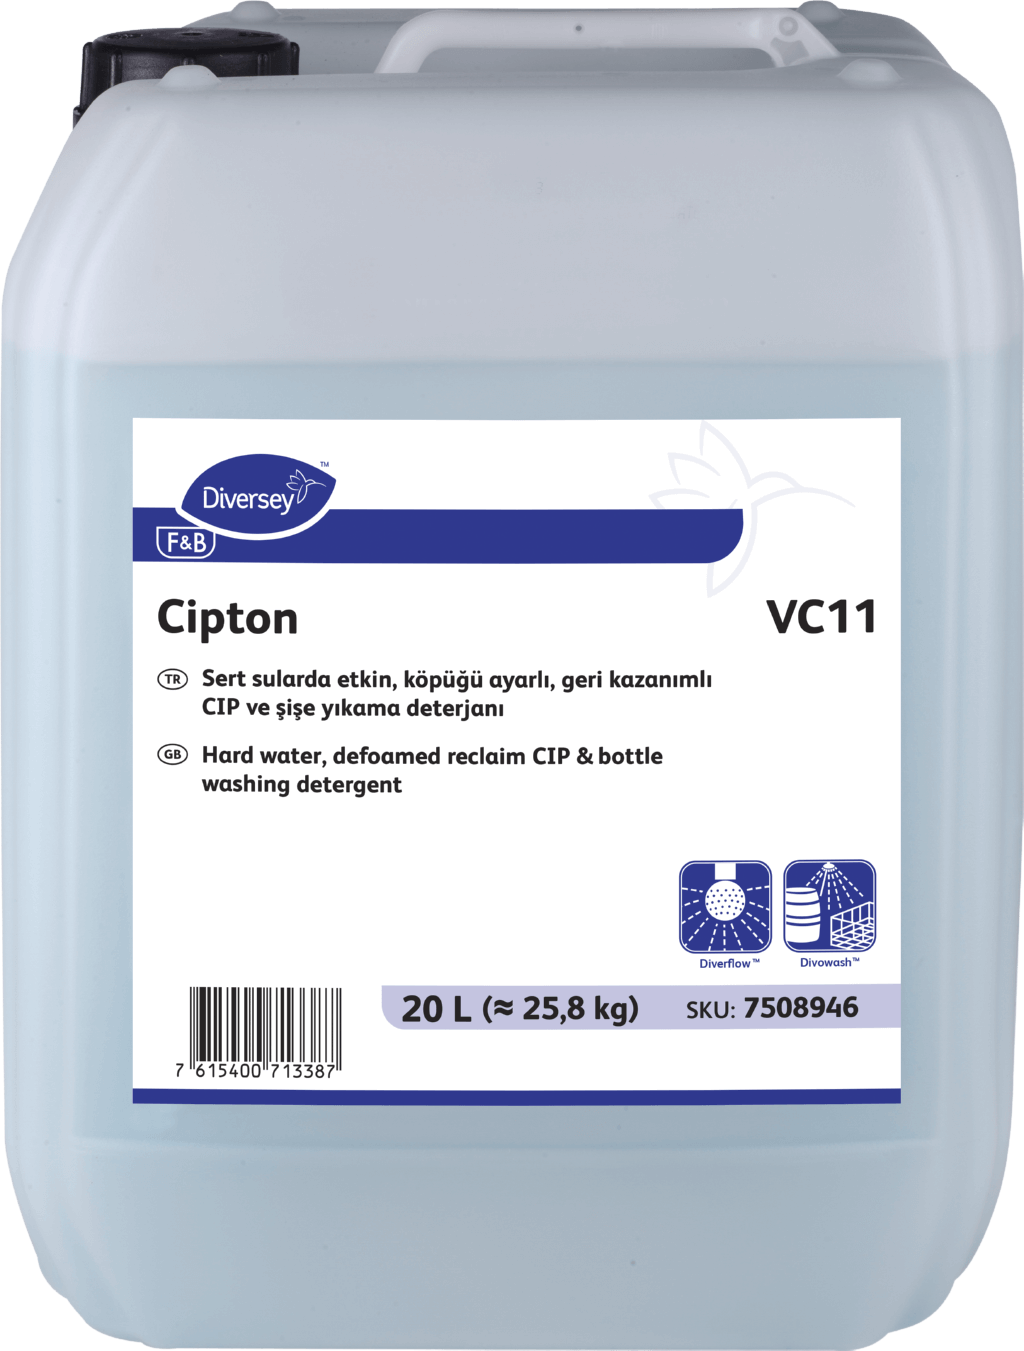 Cipton VC11